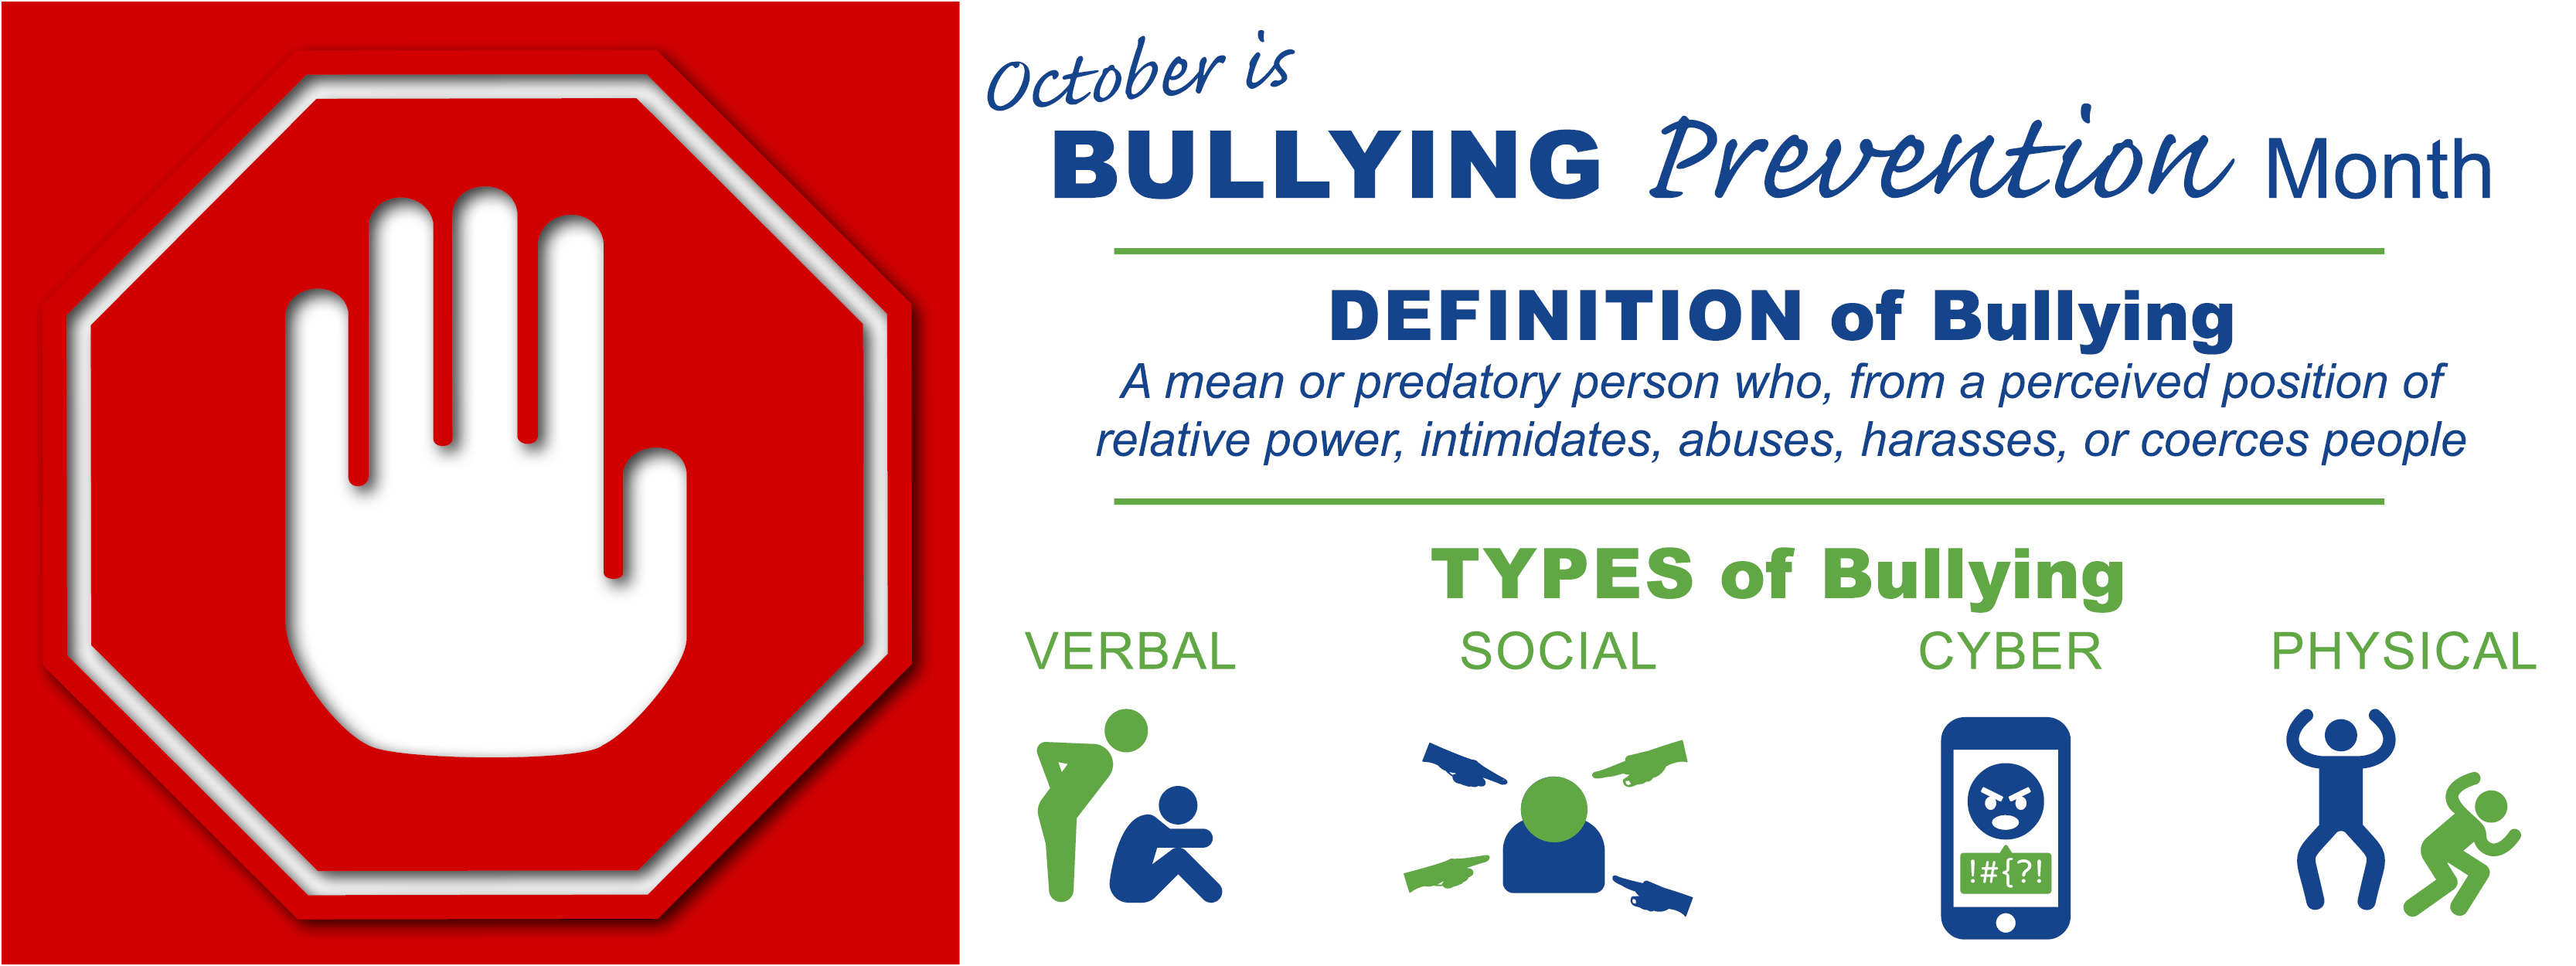 October S Bullying Prevention Month 2021 Web Slider Outlines